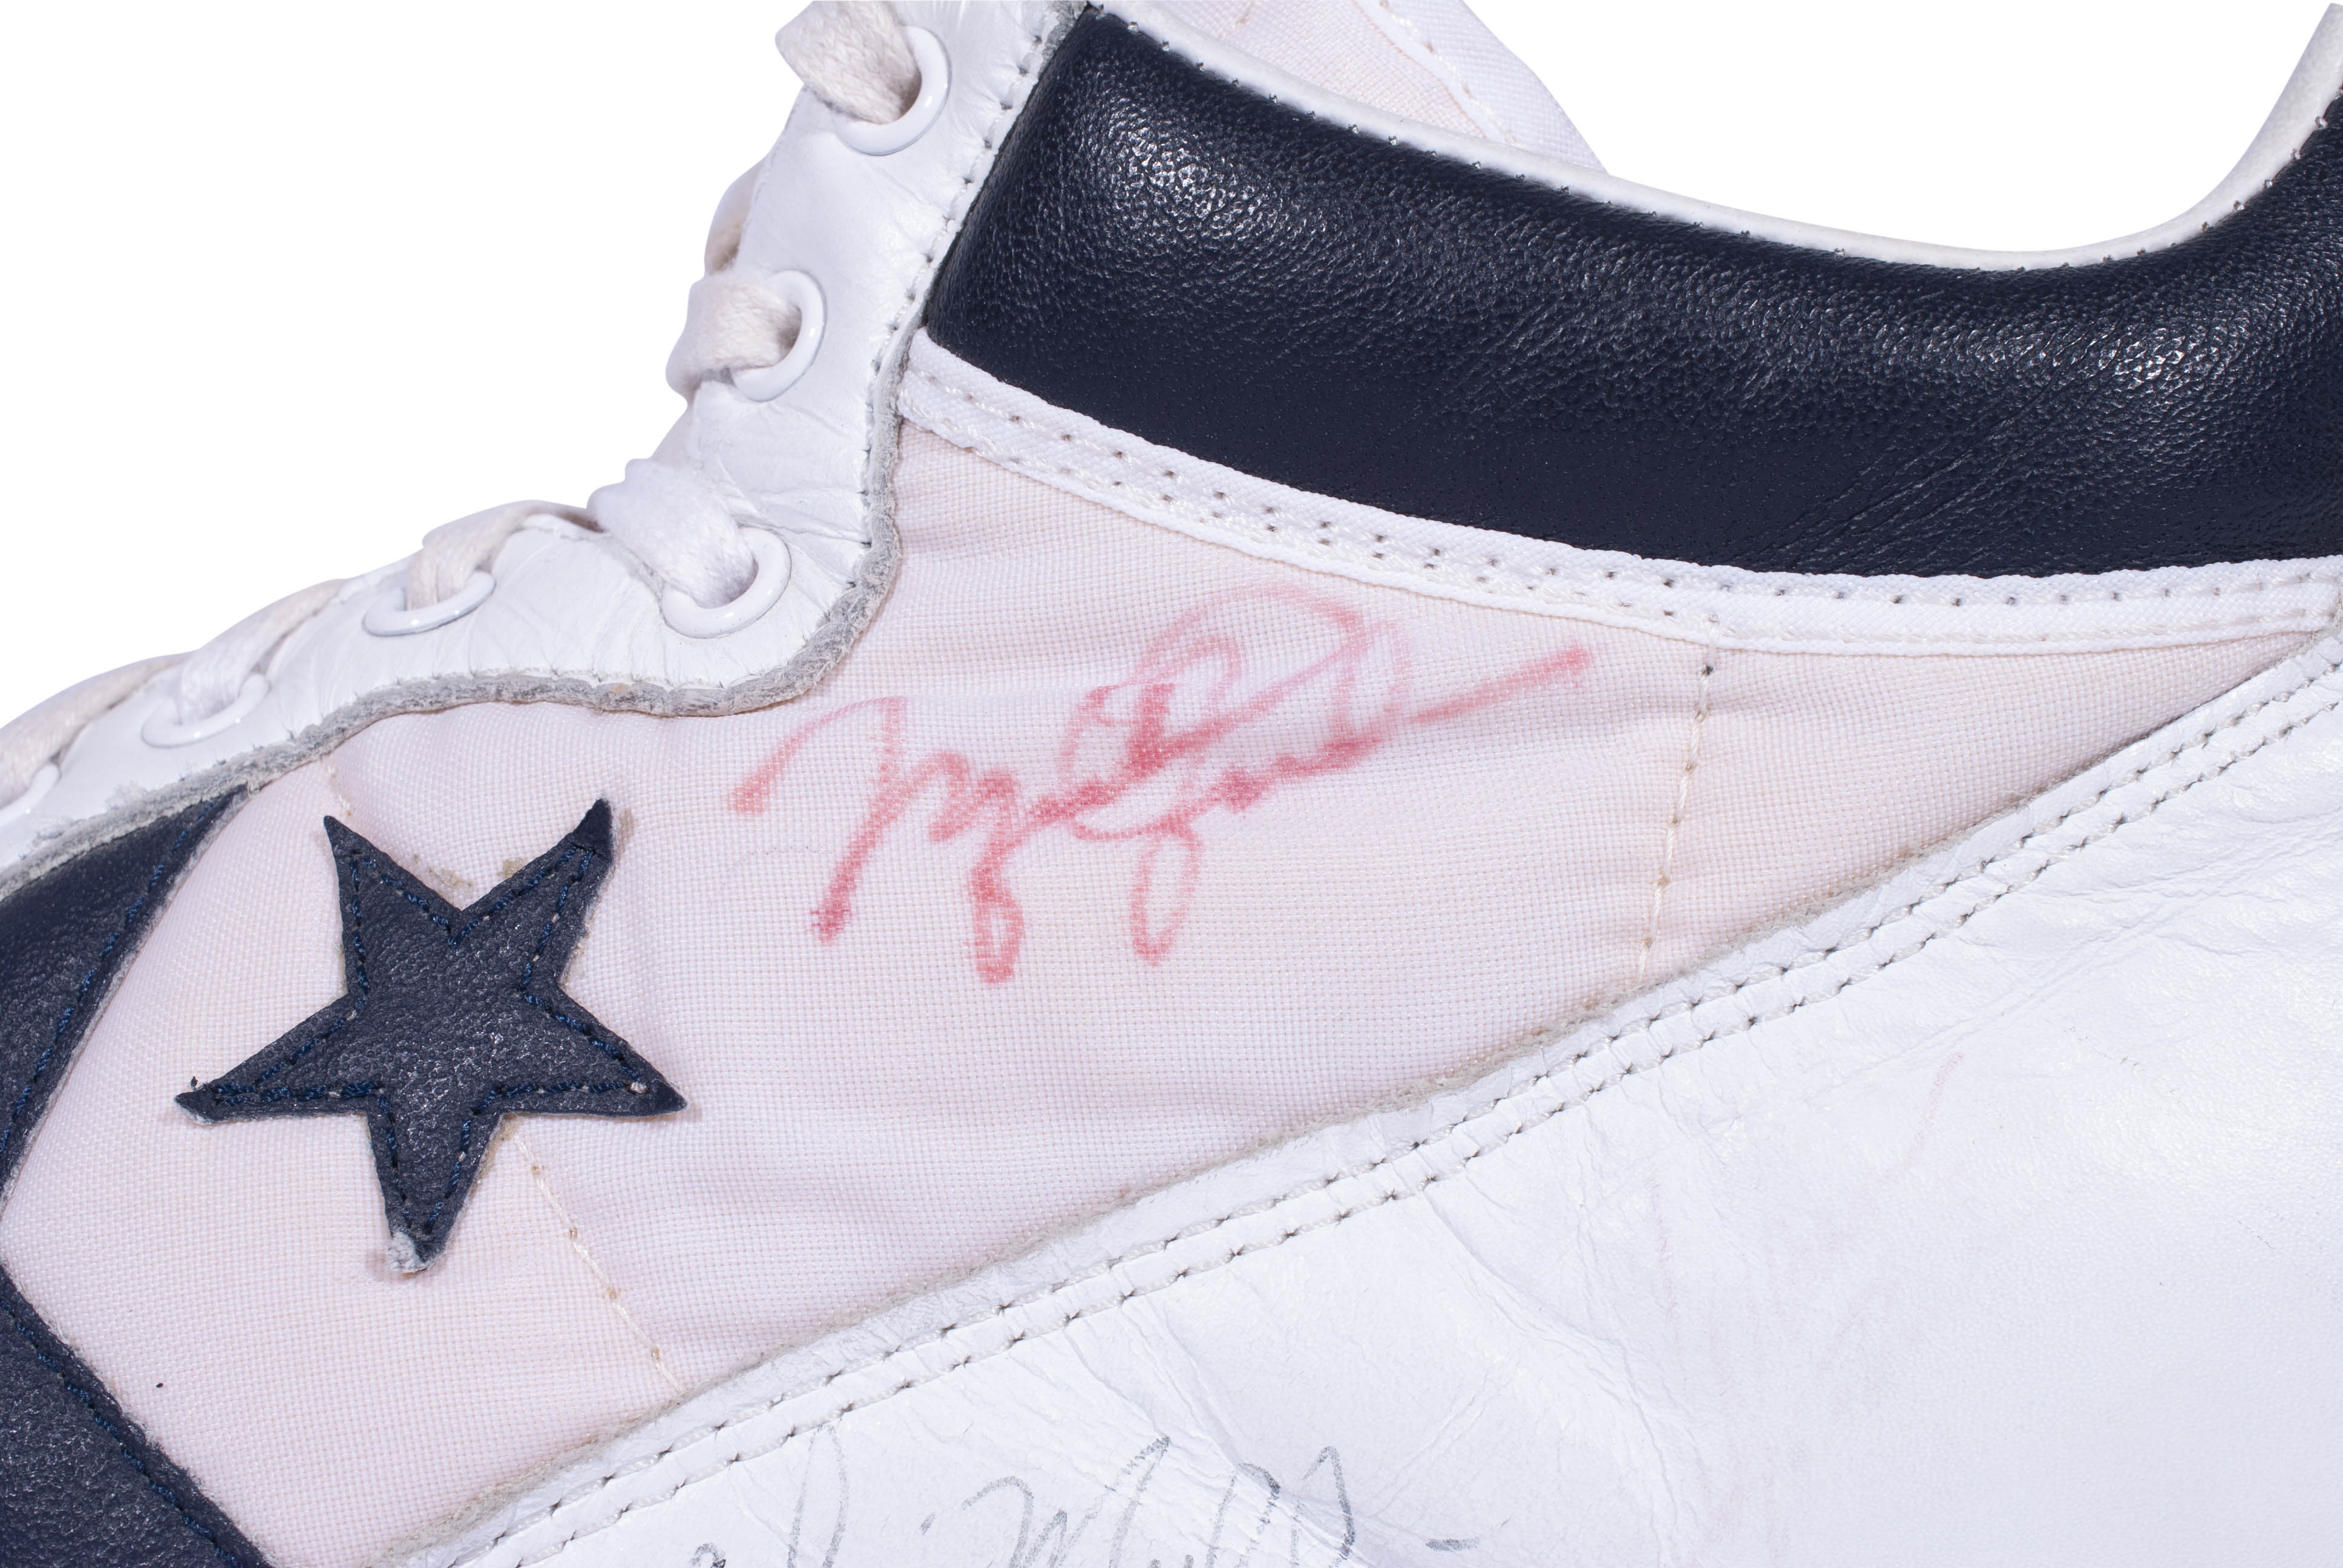 Basketball) Michael Jordan's game-worn Converse sneakers from 1984